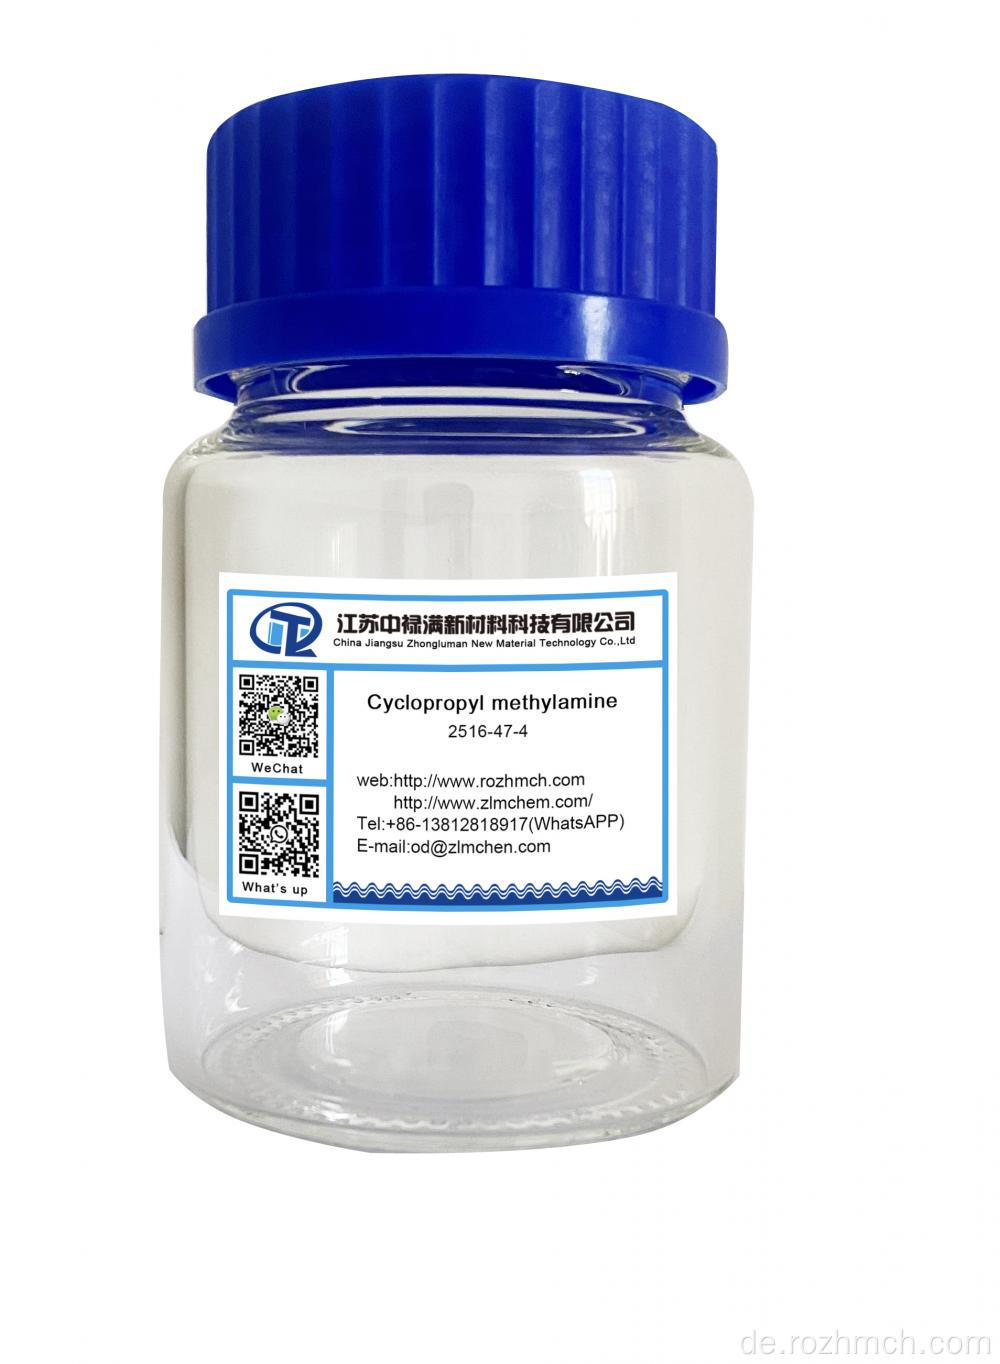 Cyclopropylmethylamin CAS 2516-47-4